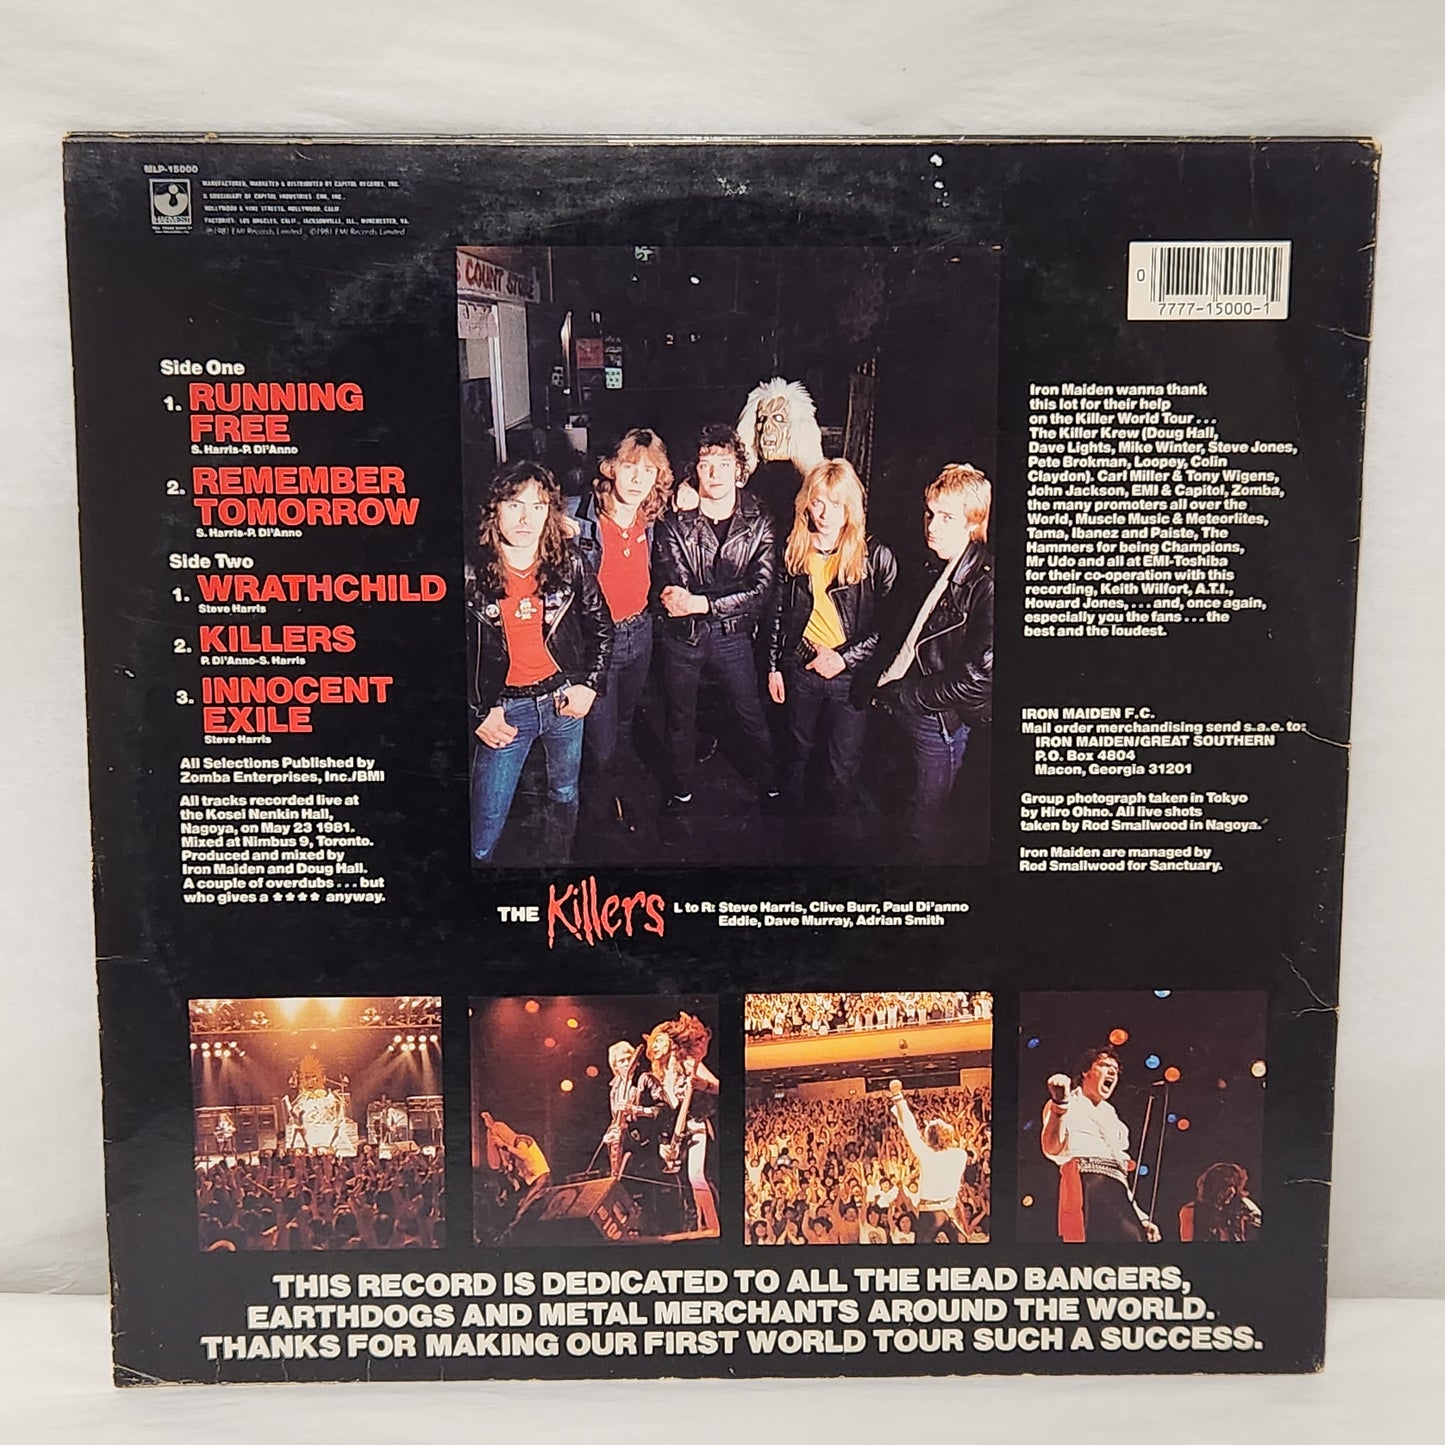 Iron Maiden "Maiden Japan" 1981 Heavy Metal Mini LP Record Album